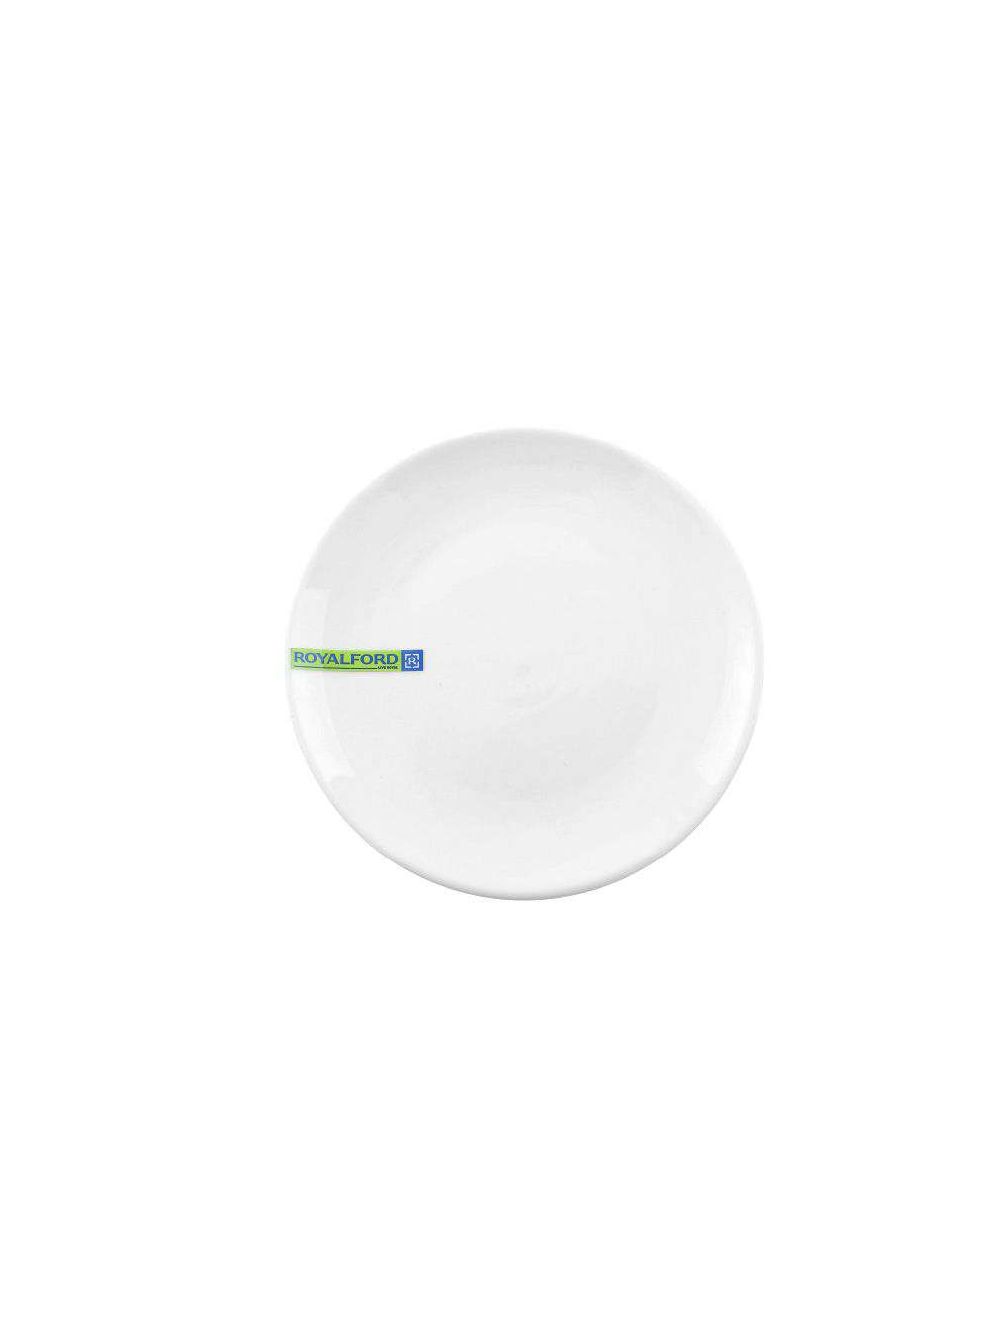 Royalford RF7993 Porcelain Magnesia Dinner Plate, 10 Inch